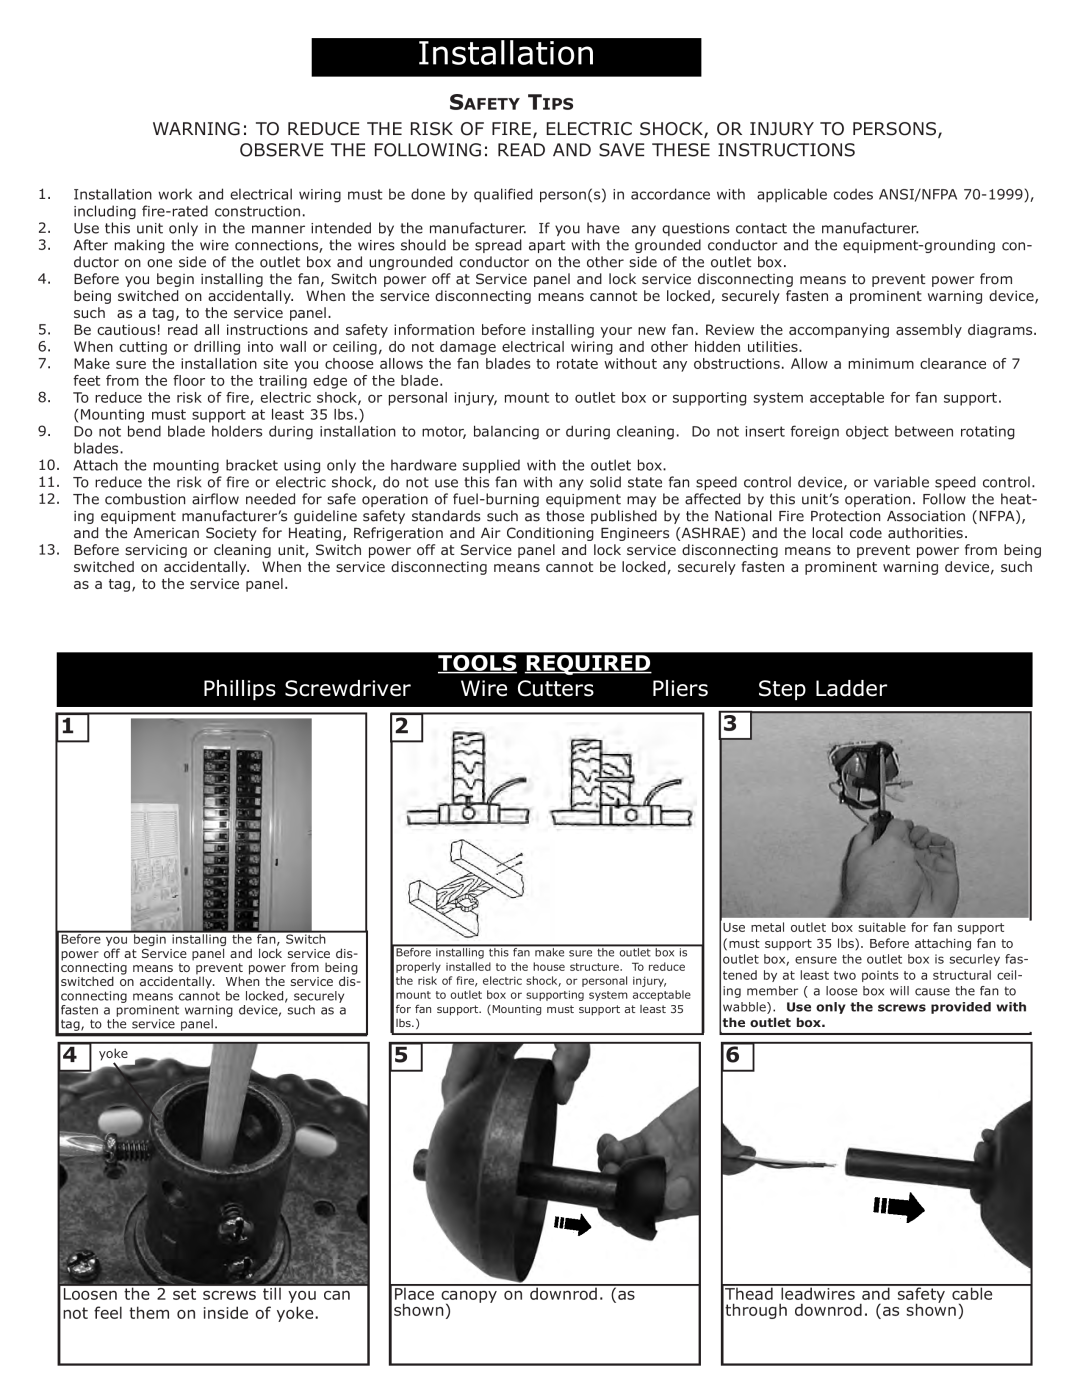 Monte Carlo Fan Company 5RH52 installation instructions Phillips Screwdriver, Wire Cutters, 3Step Ladder, Pliers 